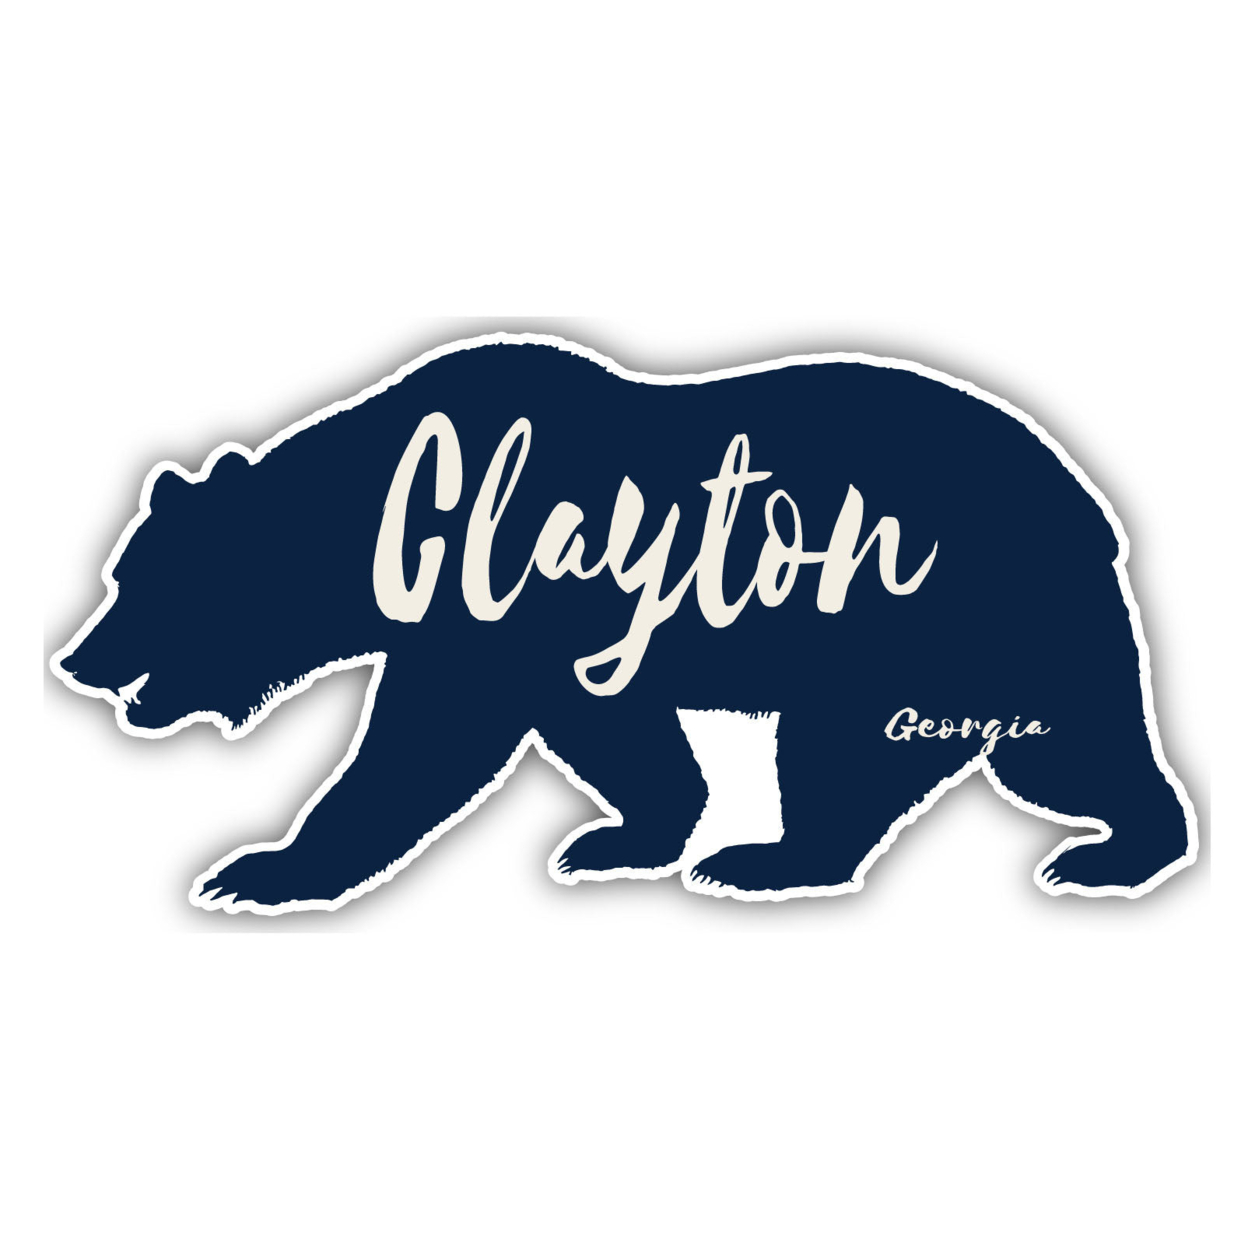 Clayton Georgia Souvenir Decorative Stickers (Choose Theme And Size) - 4-Pack, 6-Inch, Bear